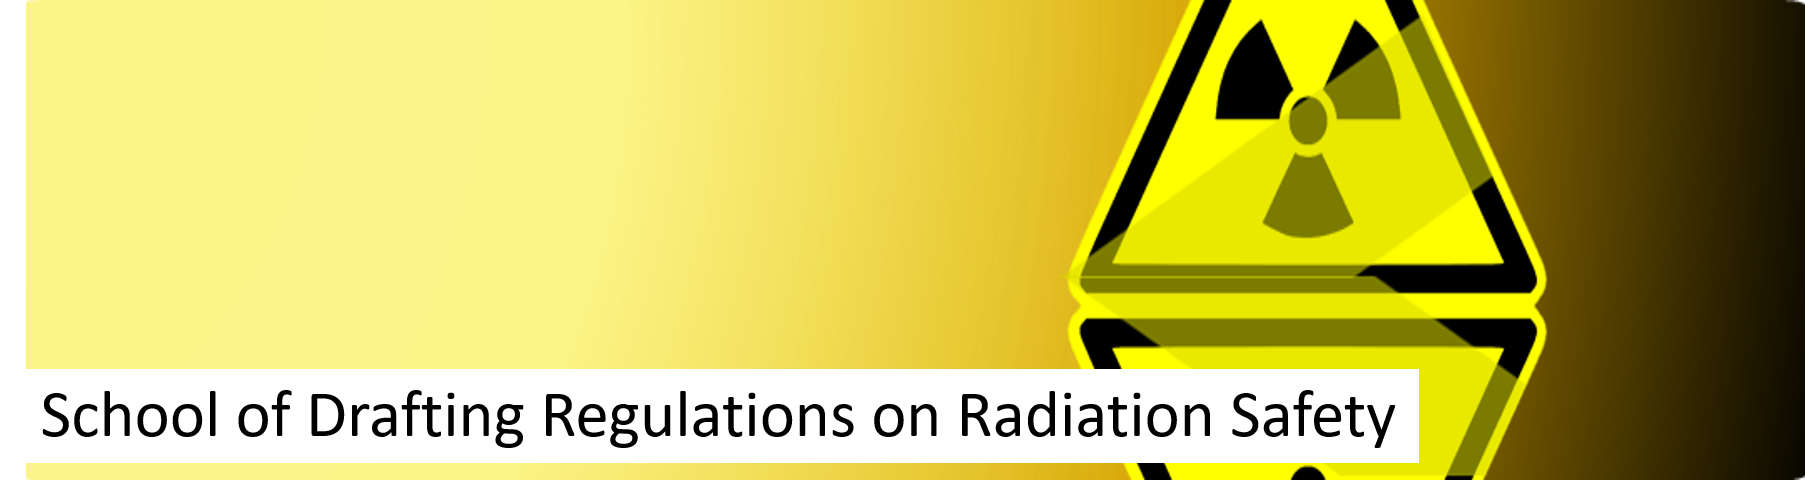 International Virtual School of Drafting Regulations on Radiation Safety